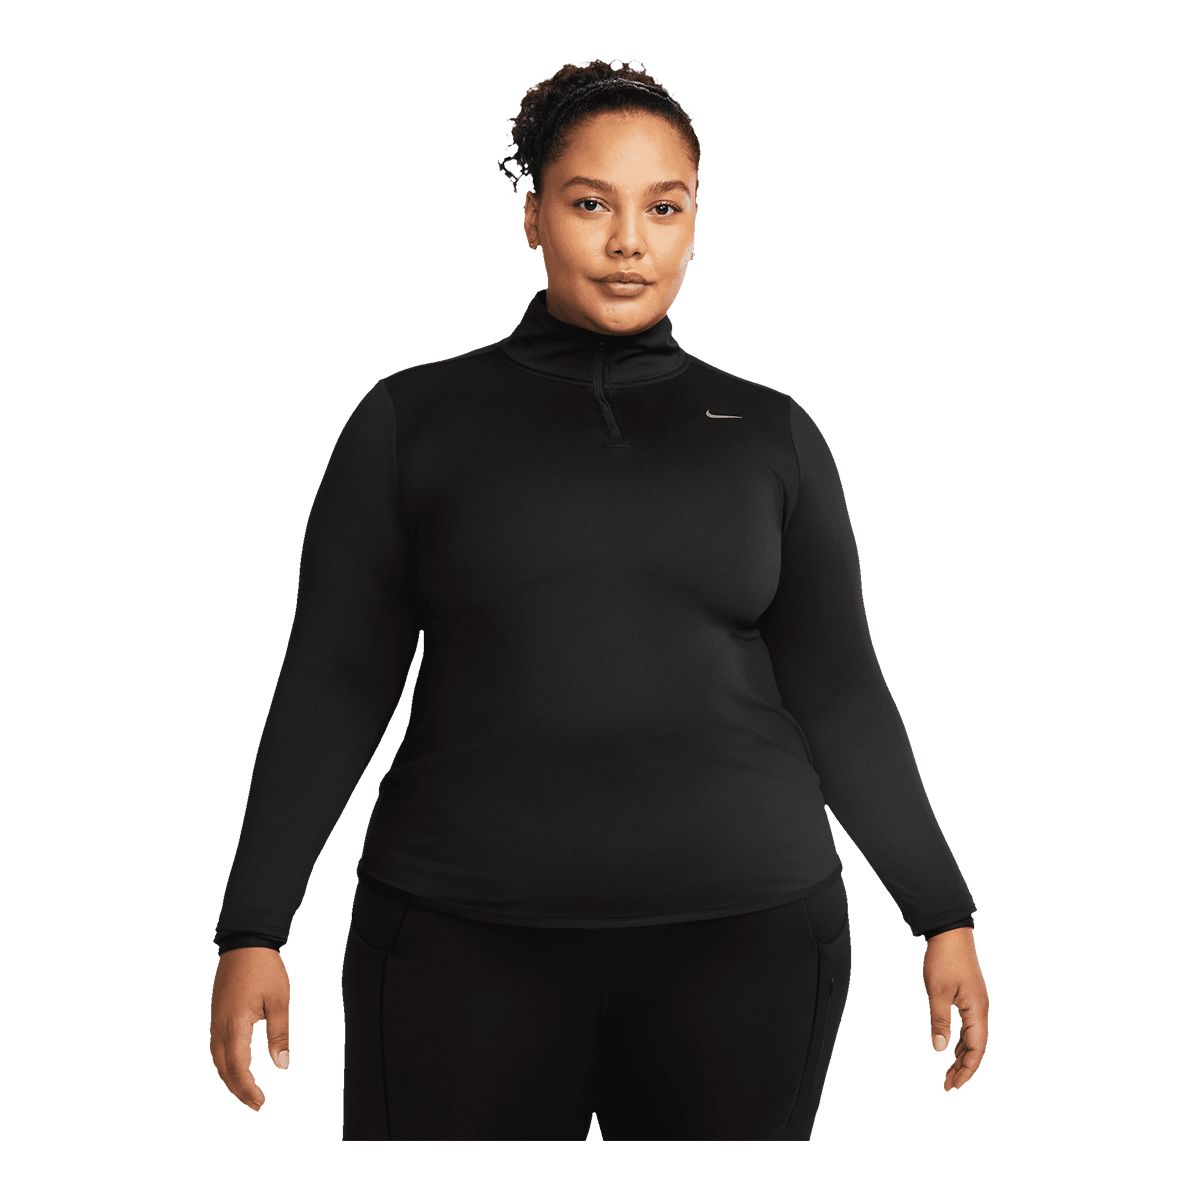 Image of Nike Women's Run Swift Element Dri-FIT UV 1/2 Zip Long Sleeve Top